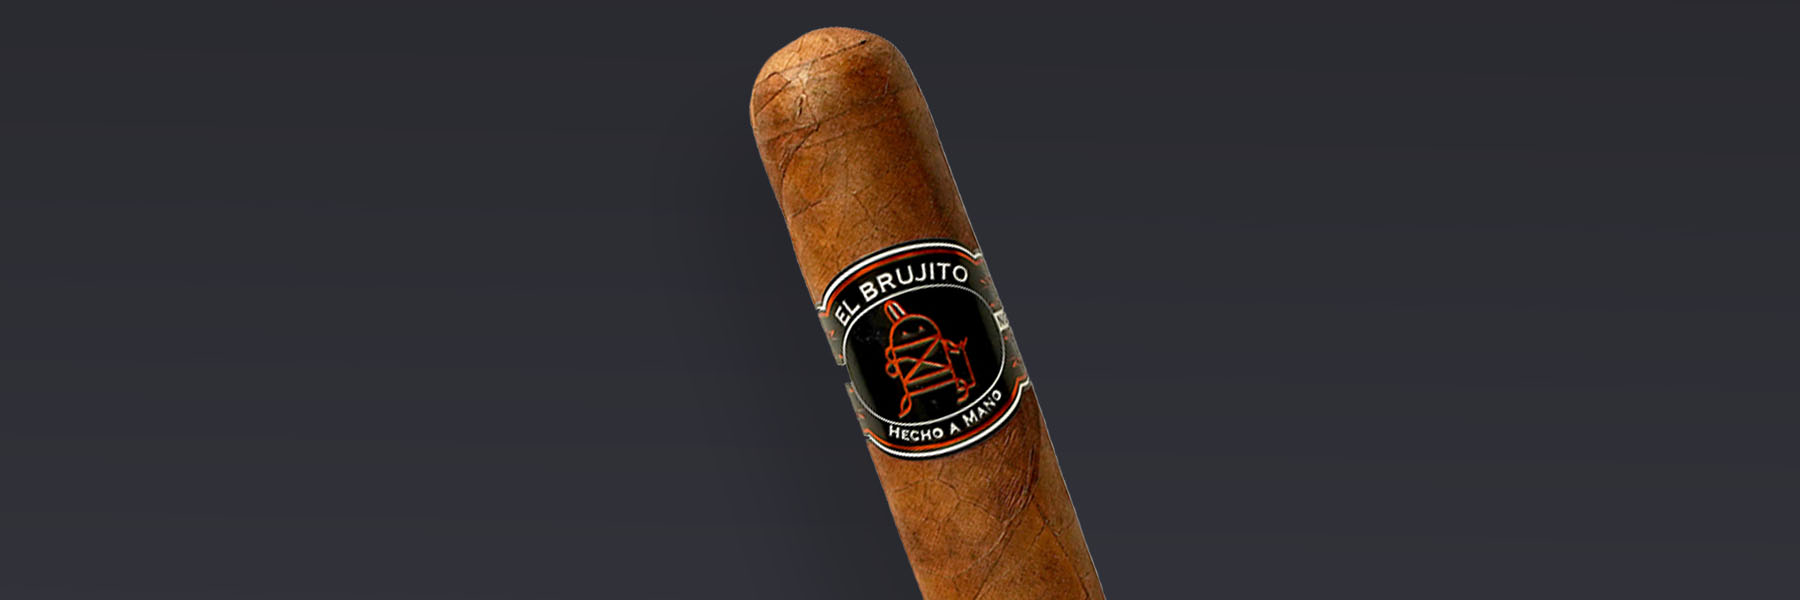 El Brujito Cigars